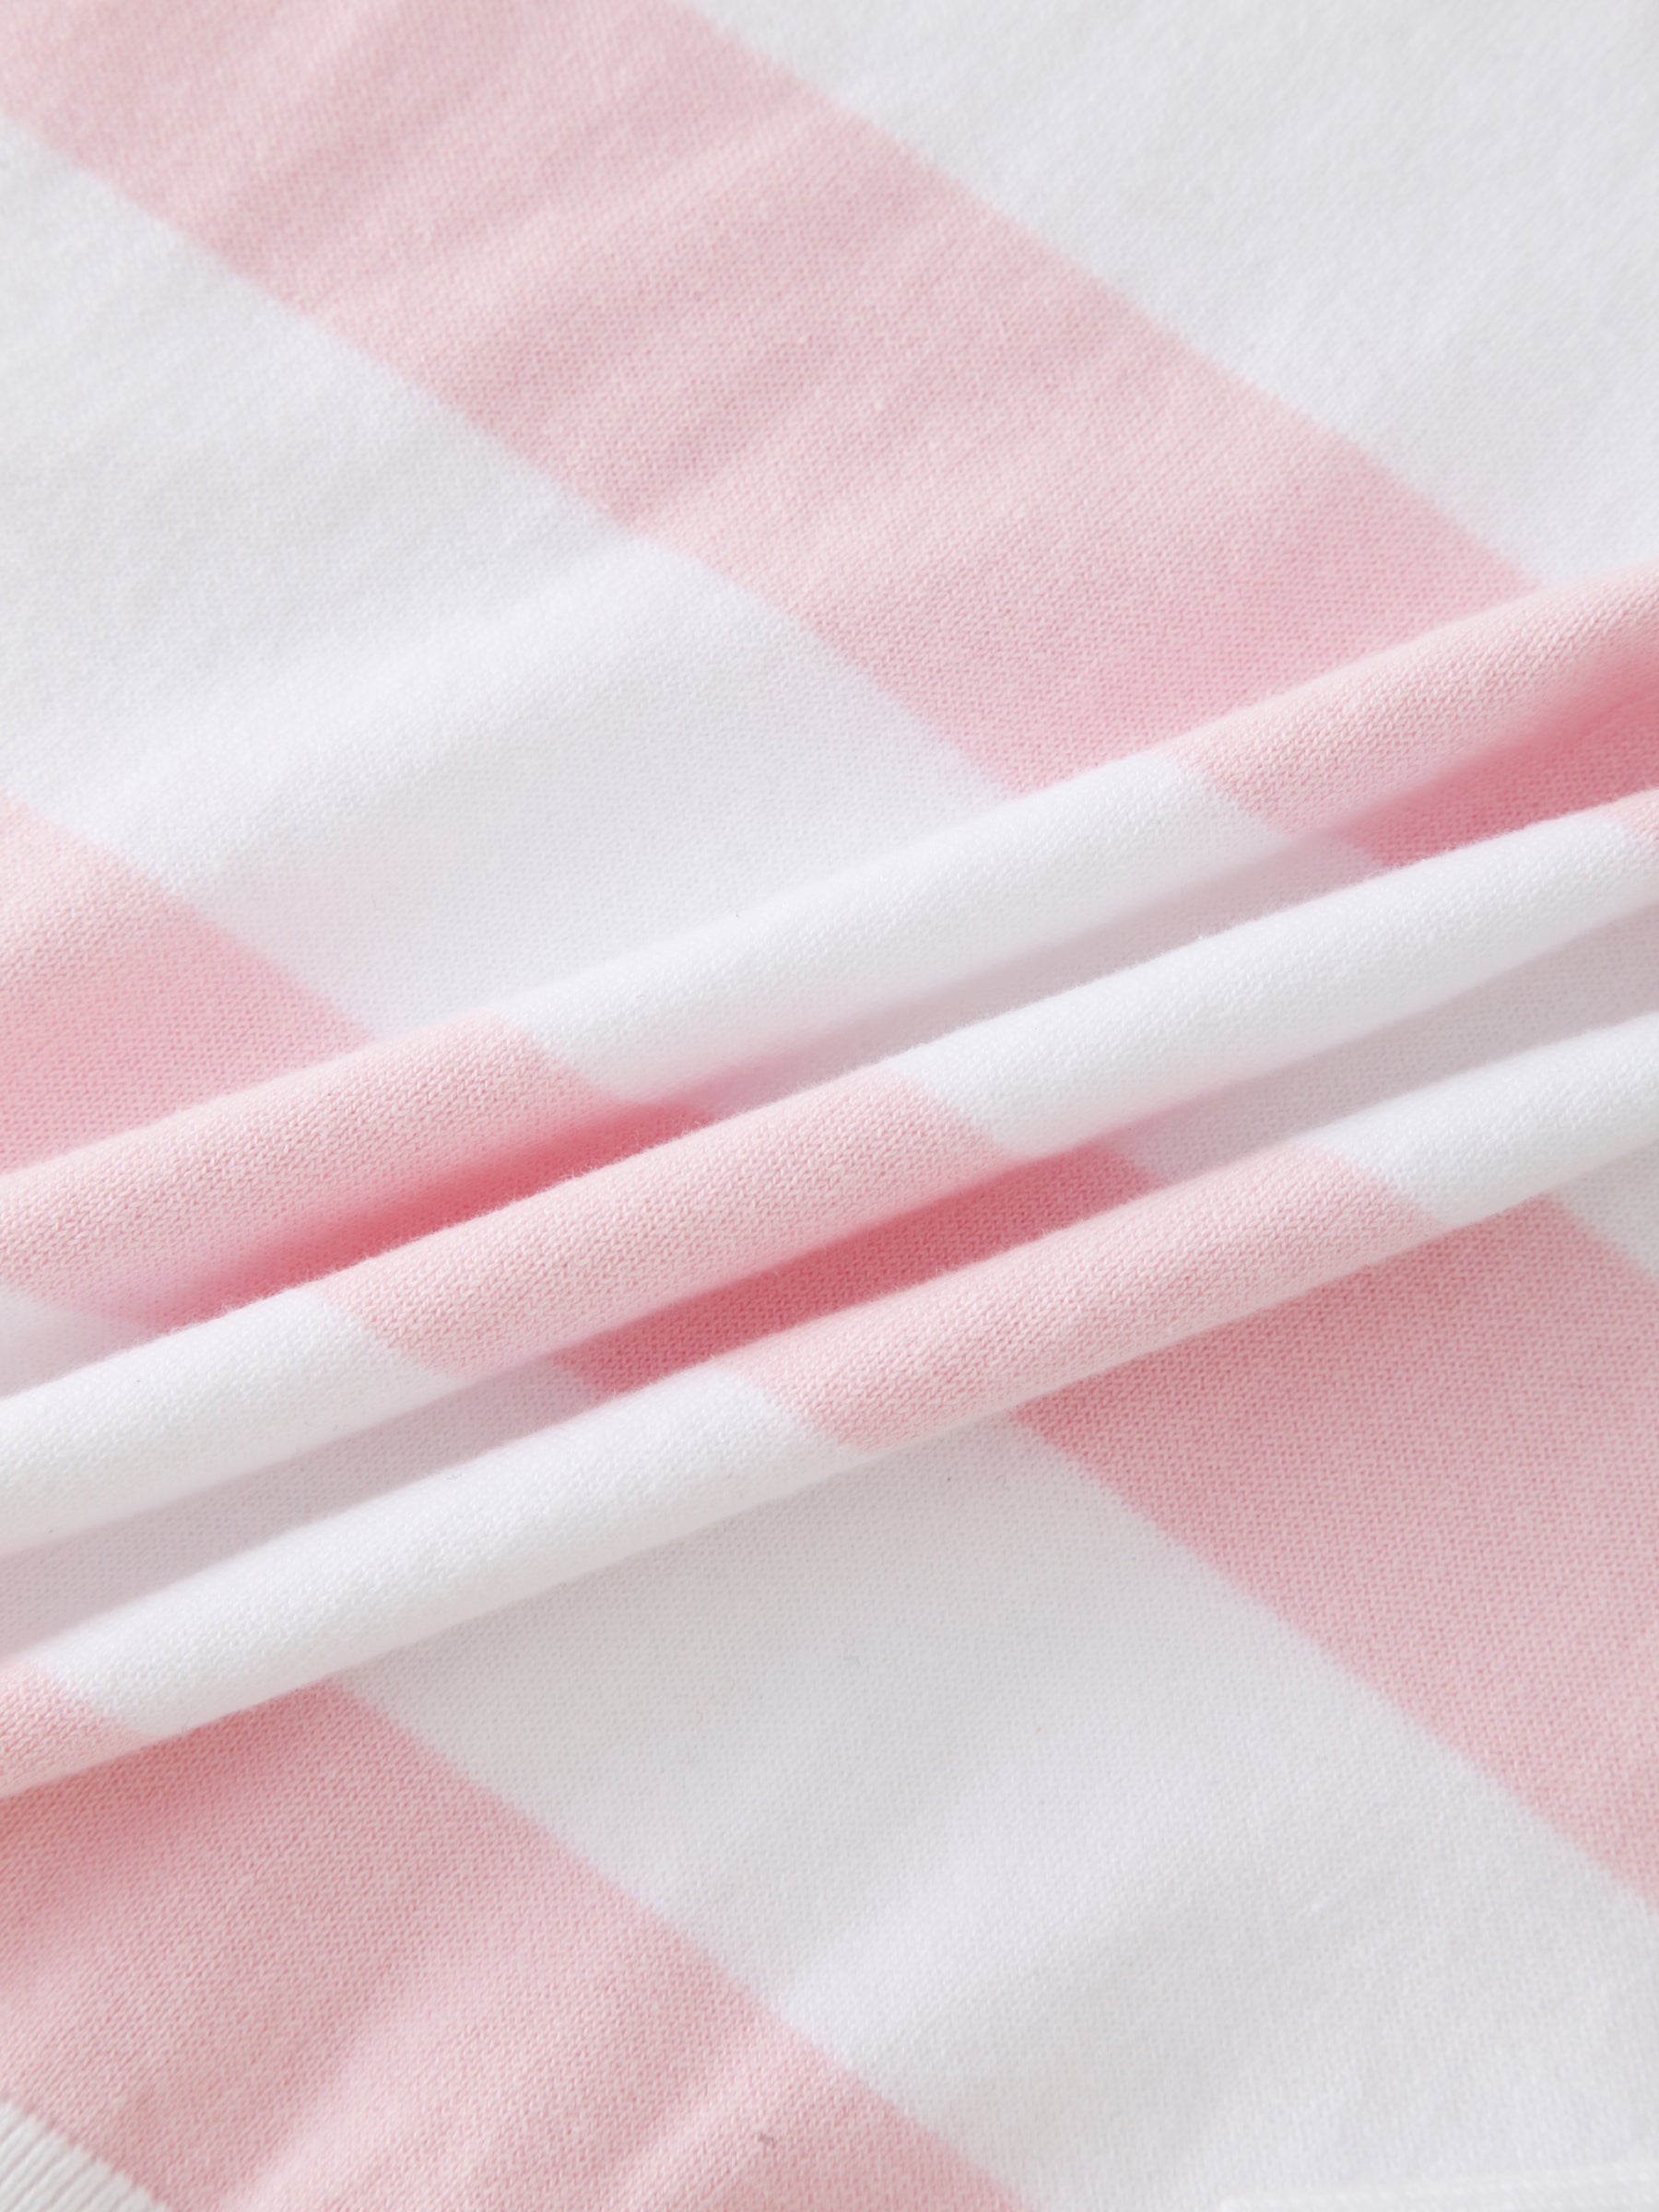 Striped Cotton Sweater-Light Pink